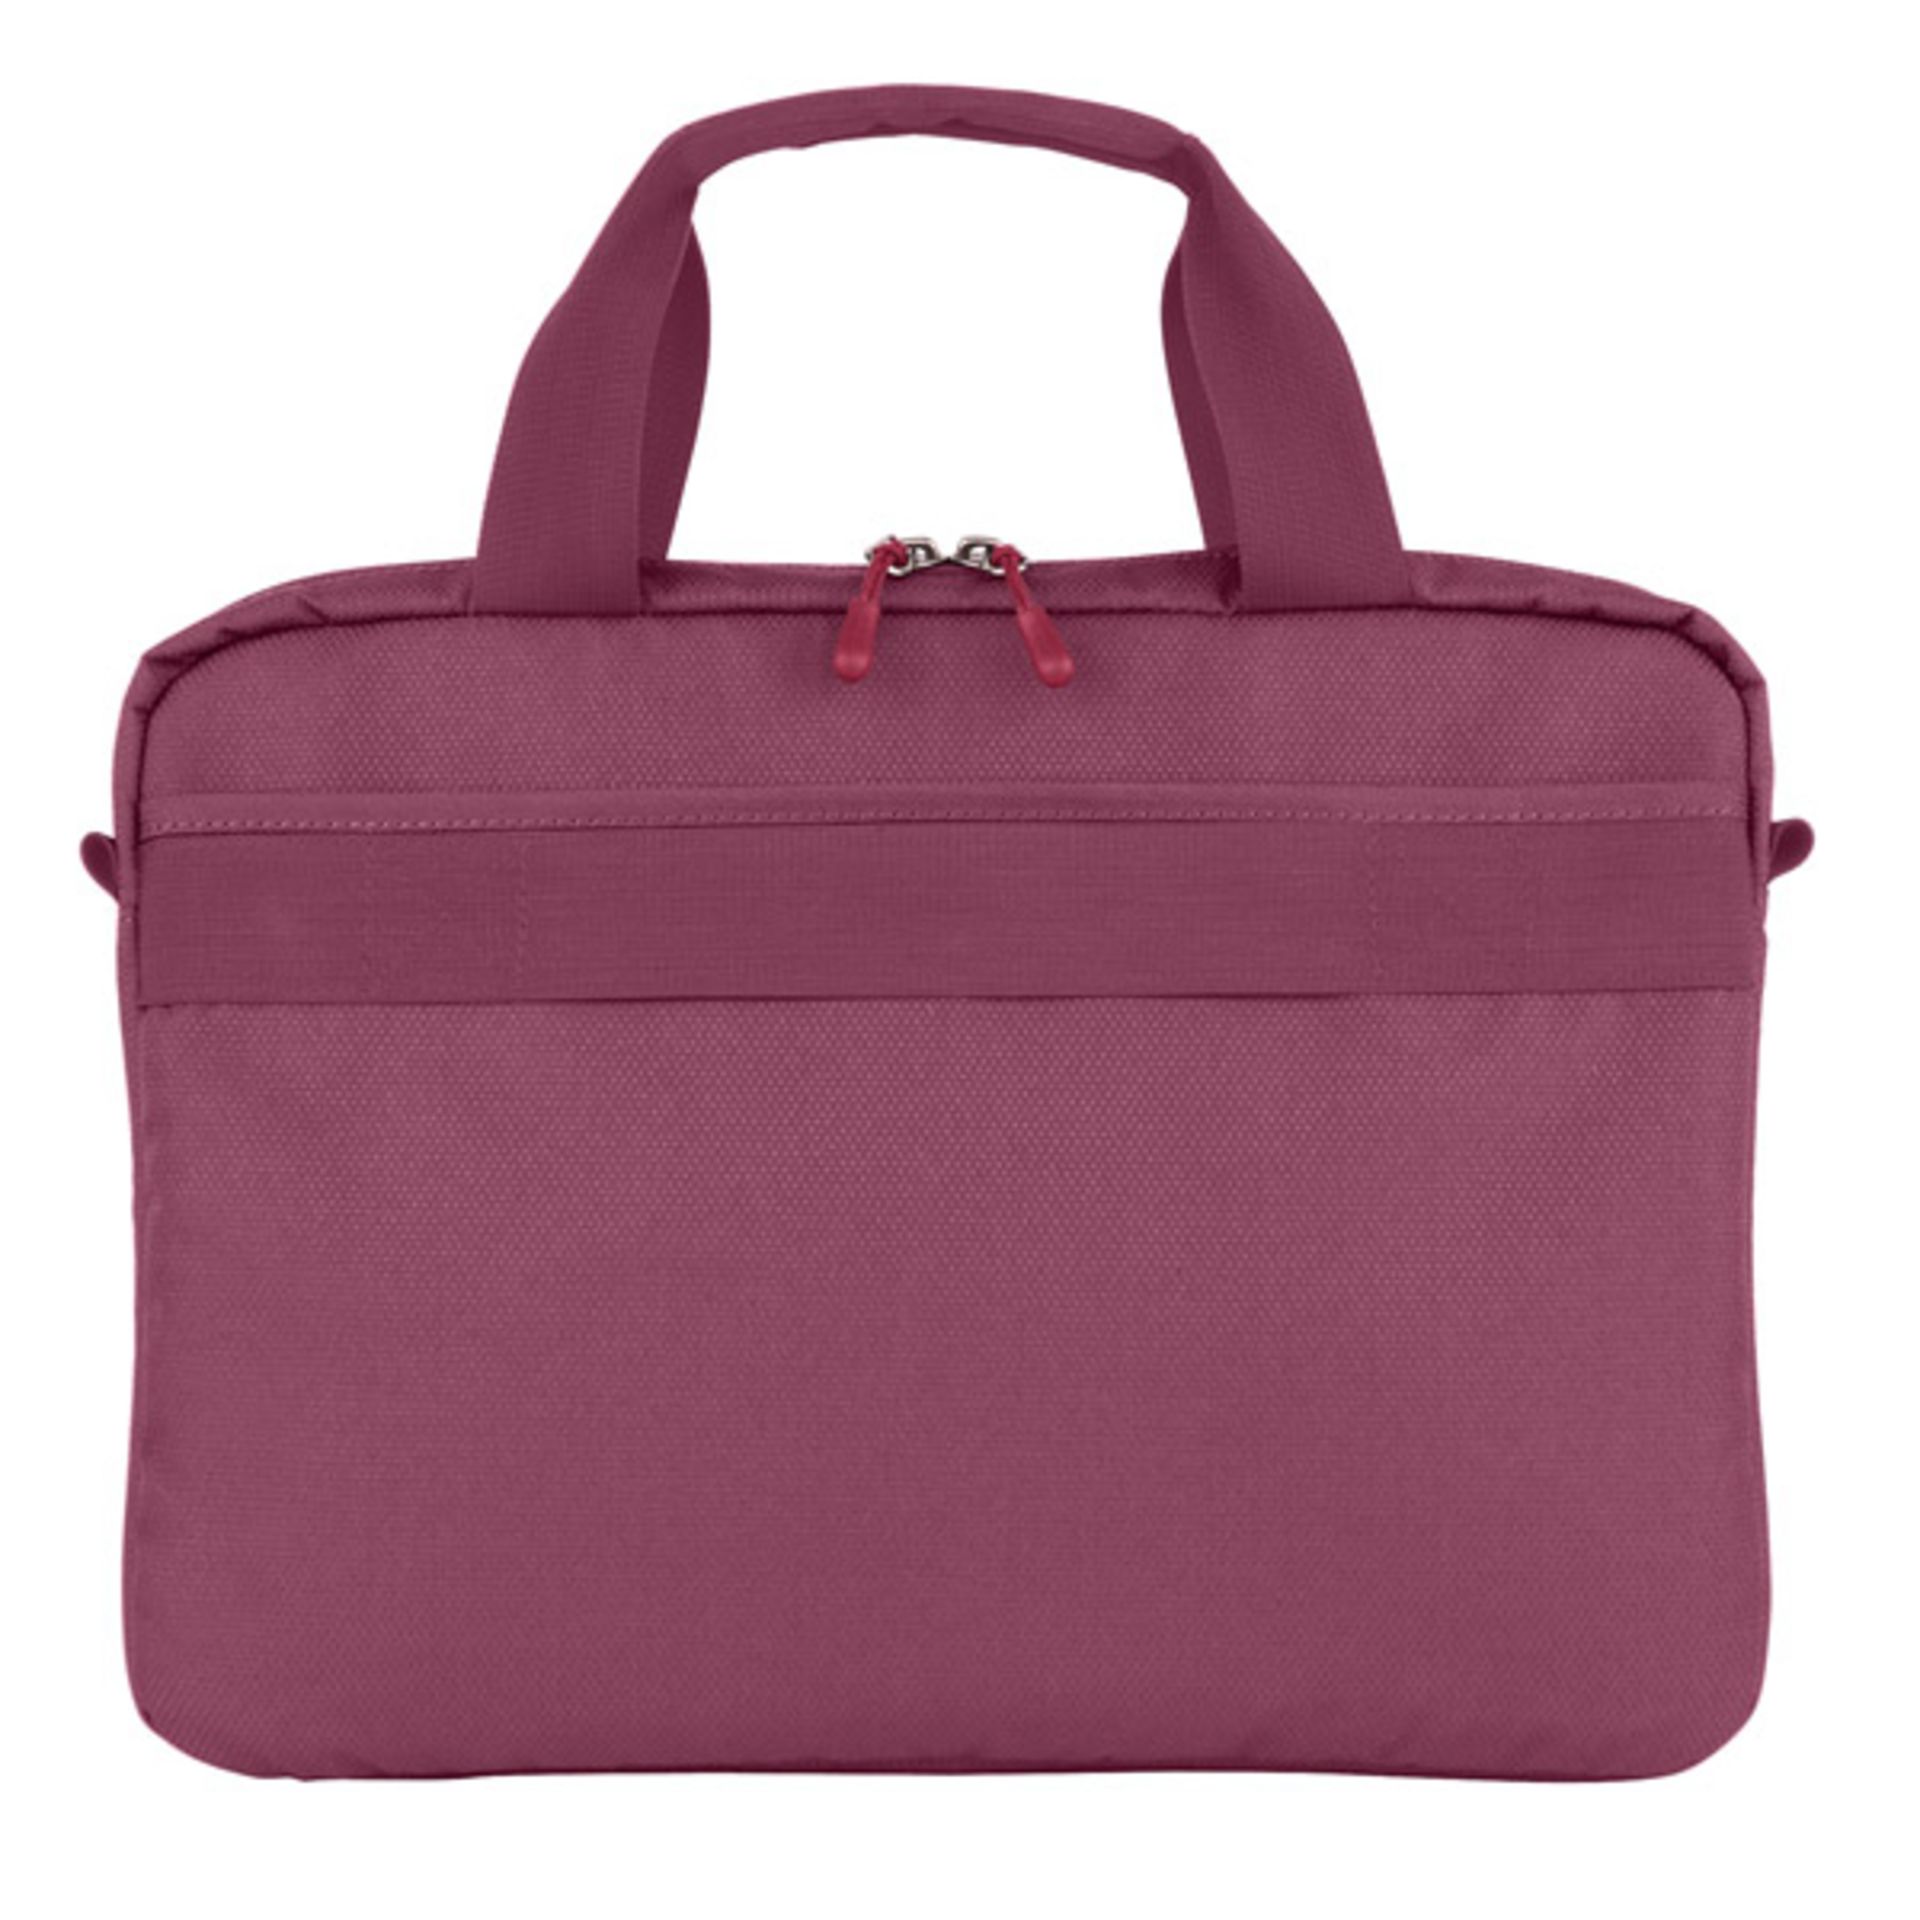 + VAT Brand New STM Swift Medium Shoulder Bag - RRP £42.99 Amazon Price £33.57 - For Laptop/Tablet - Image 3 of 3